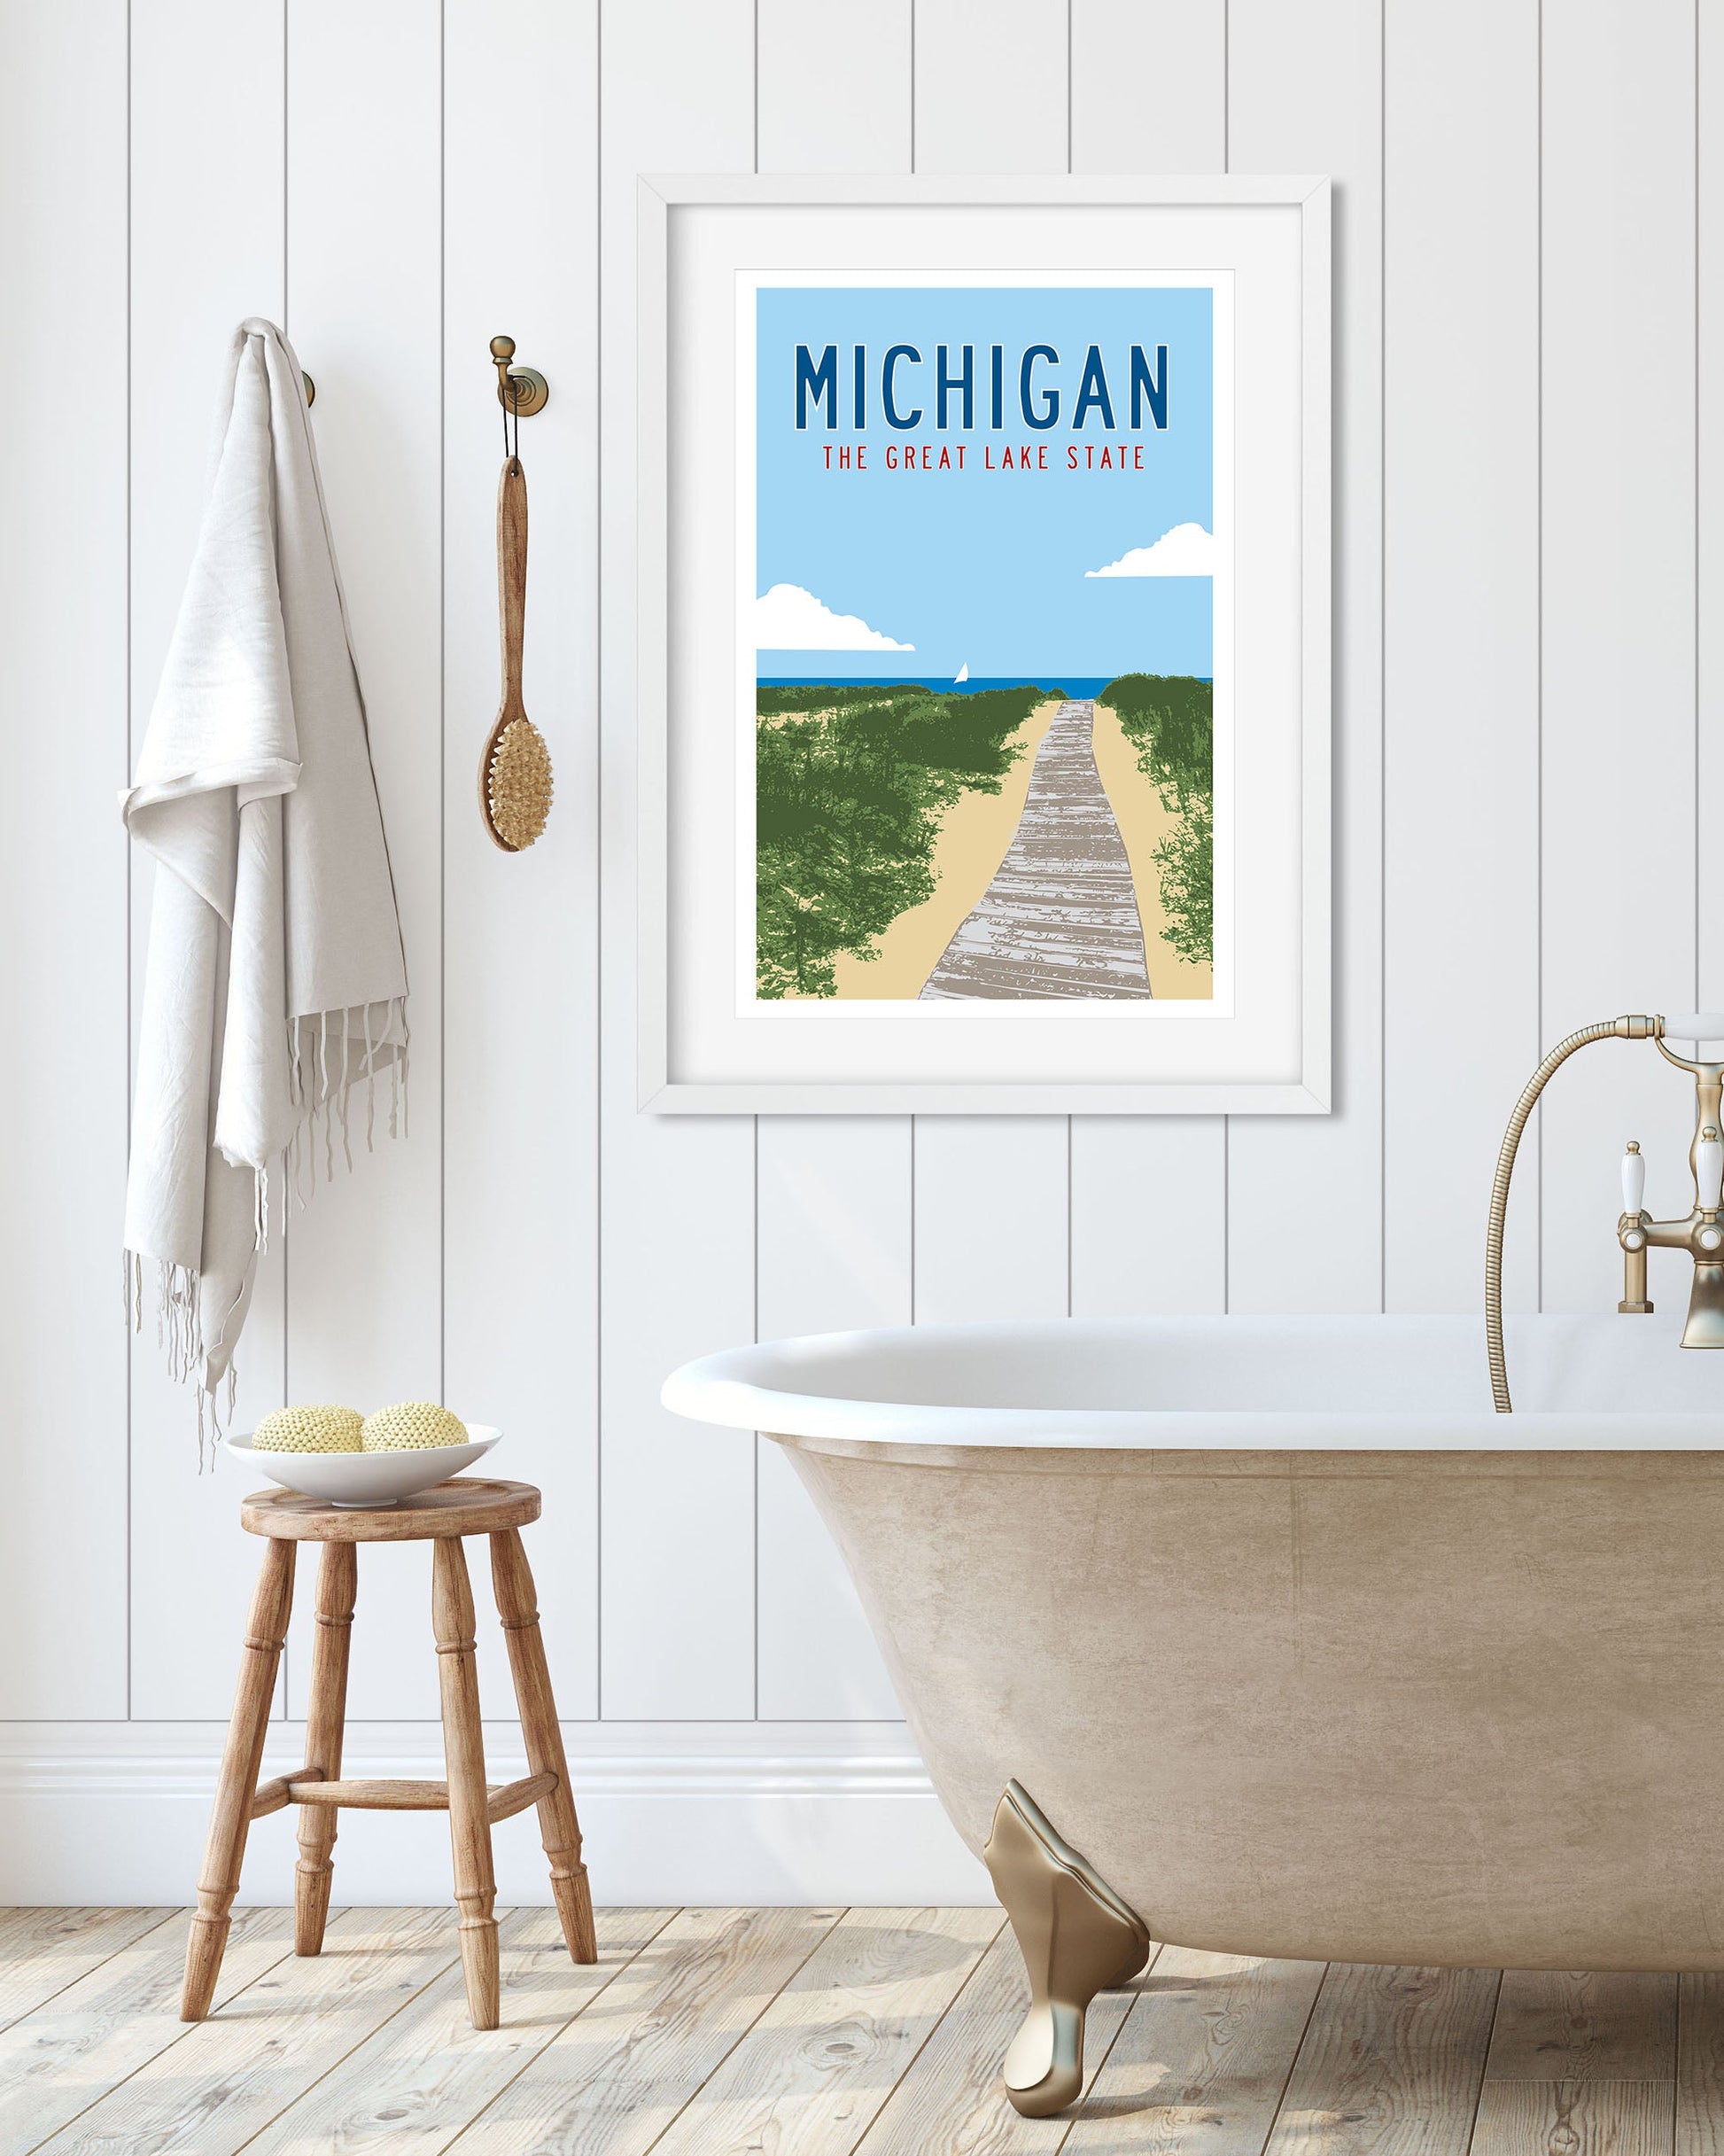 Vintage Michigan Travel Poster art hanging in a bathroom - Transit Design